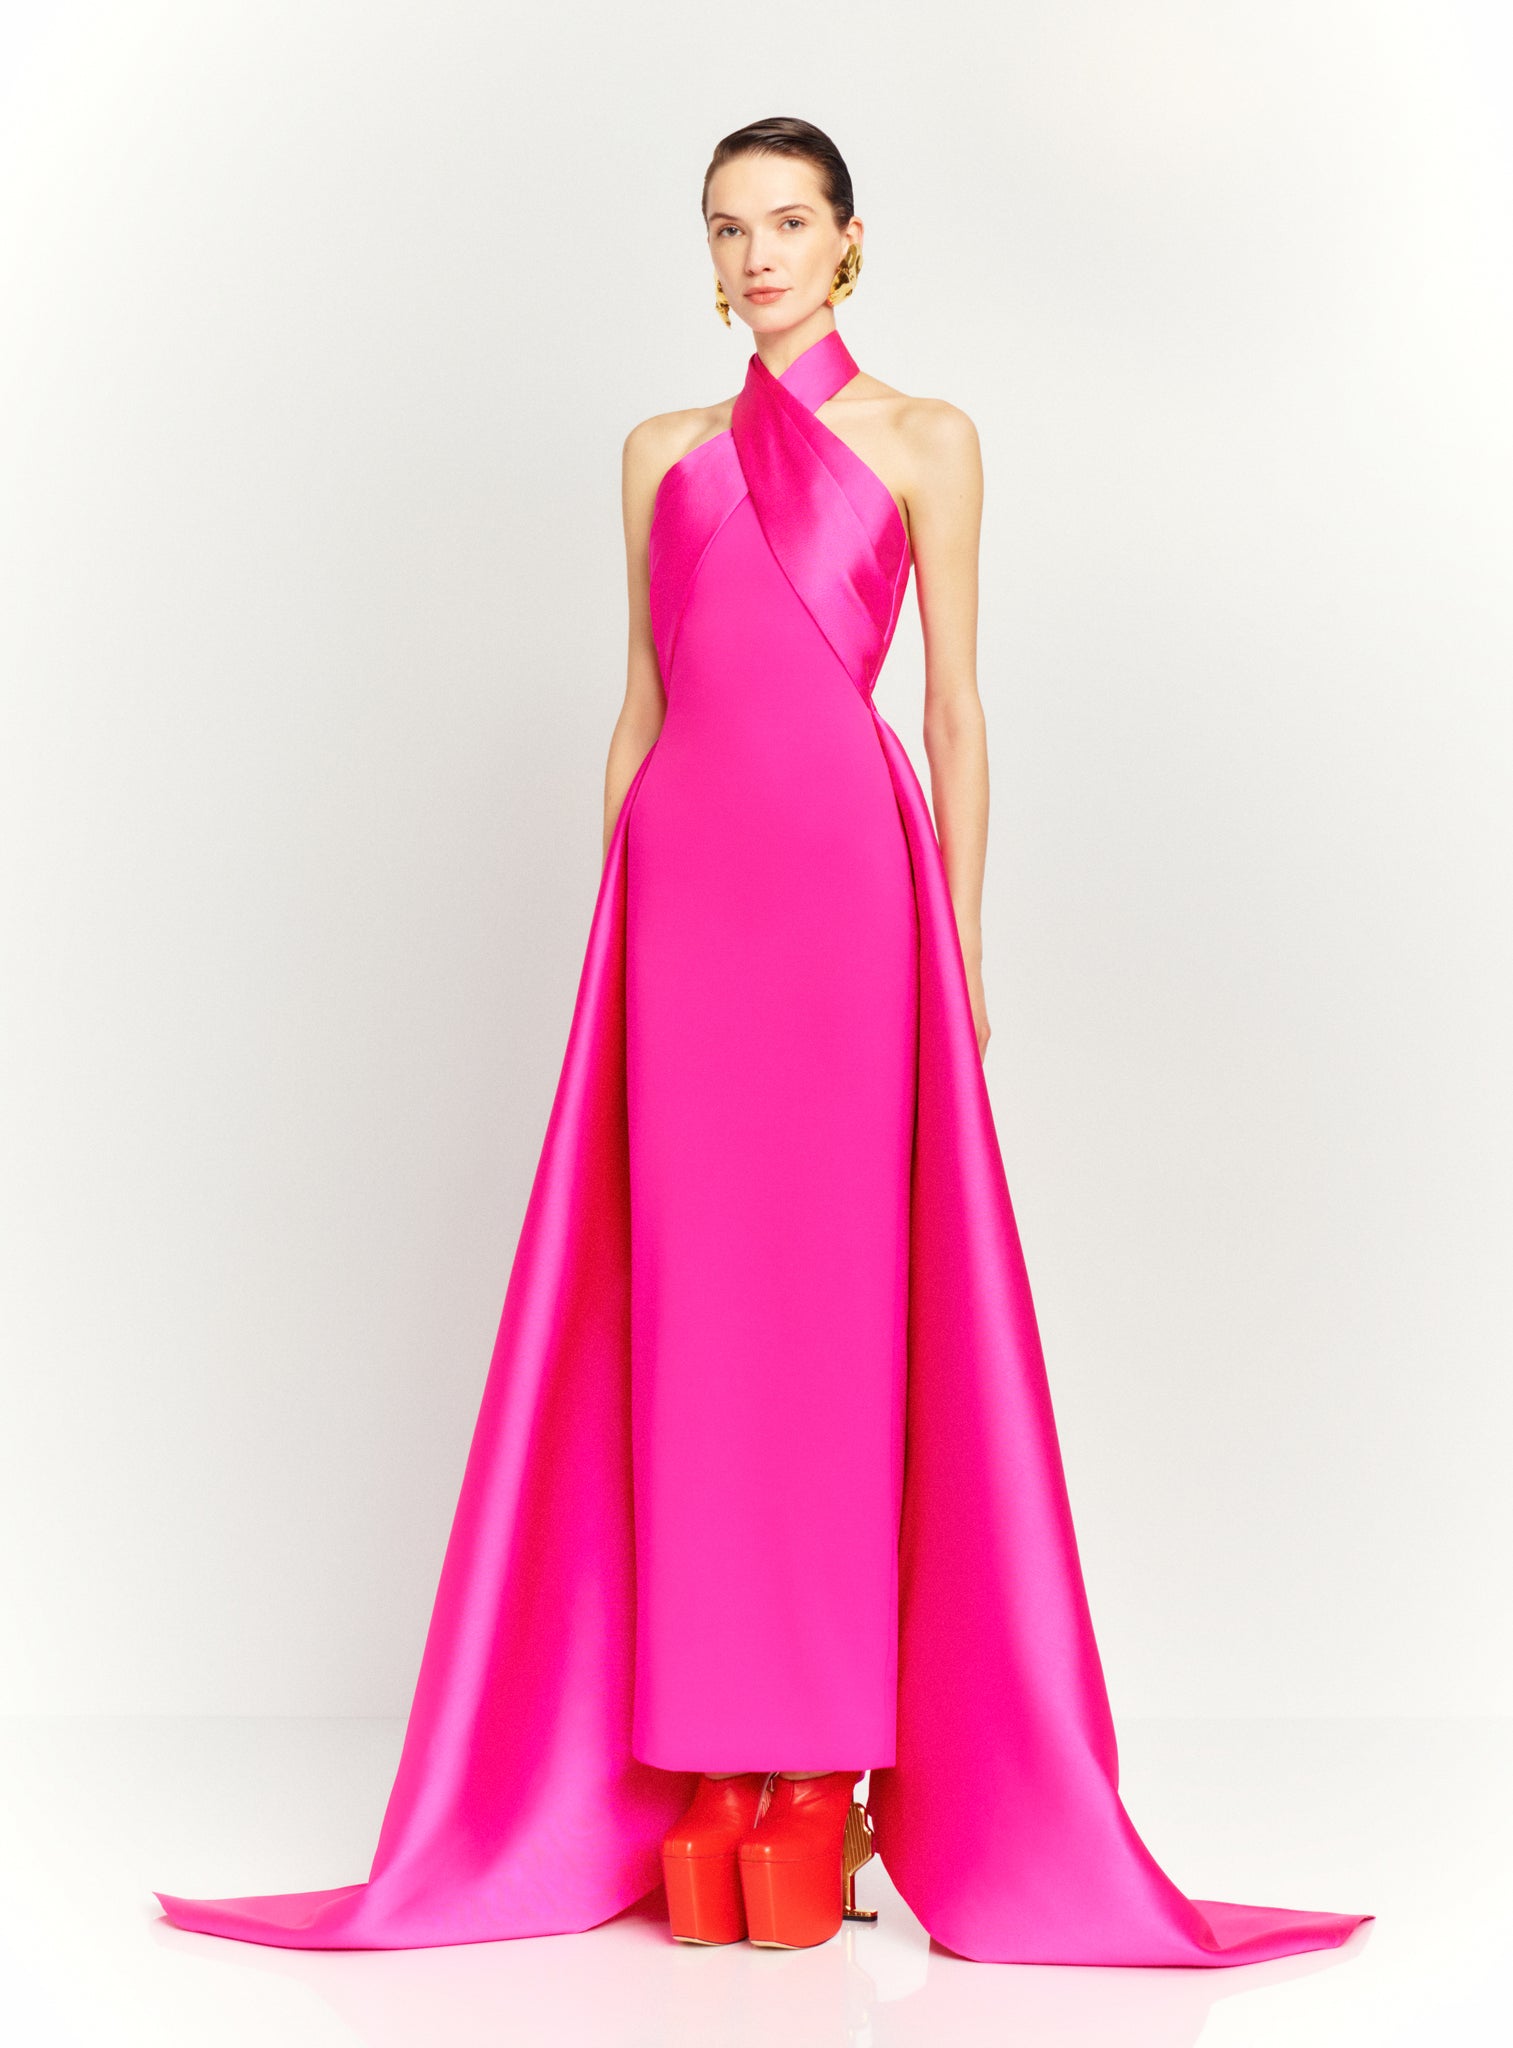 The Rumi Maxi Dress in Pink